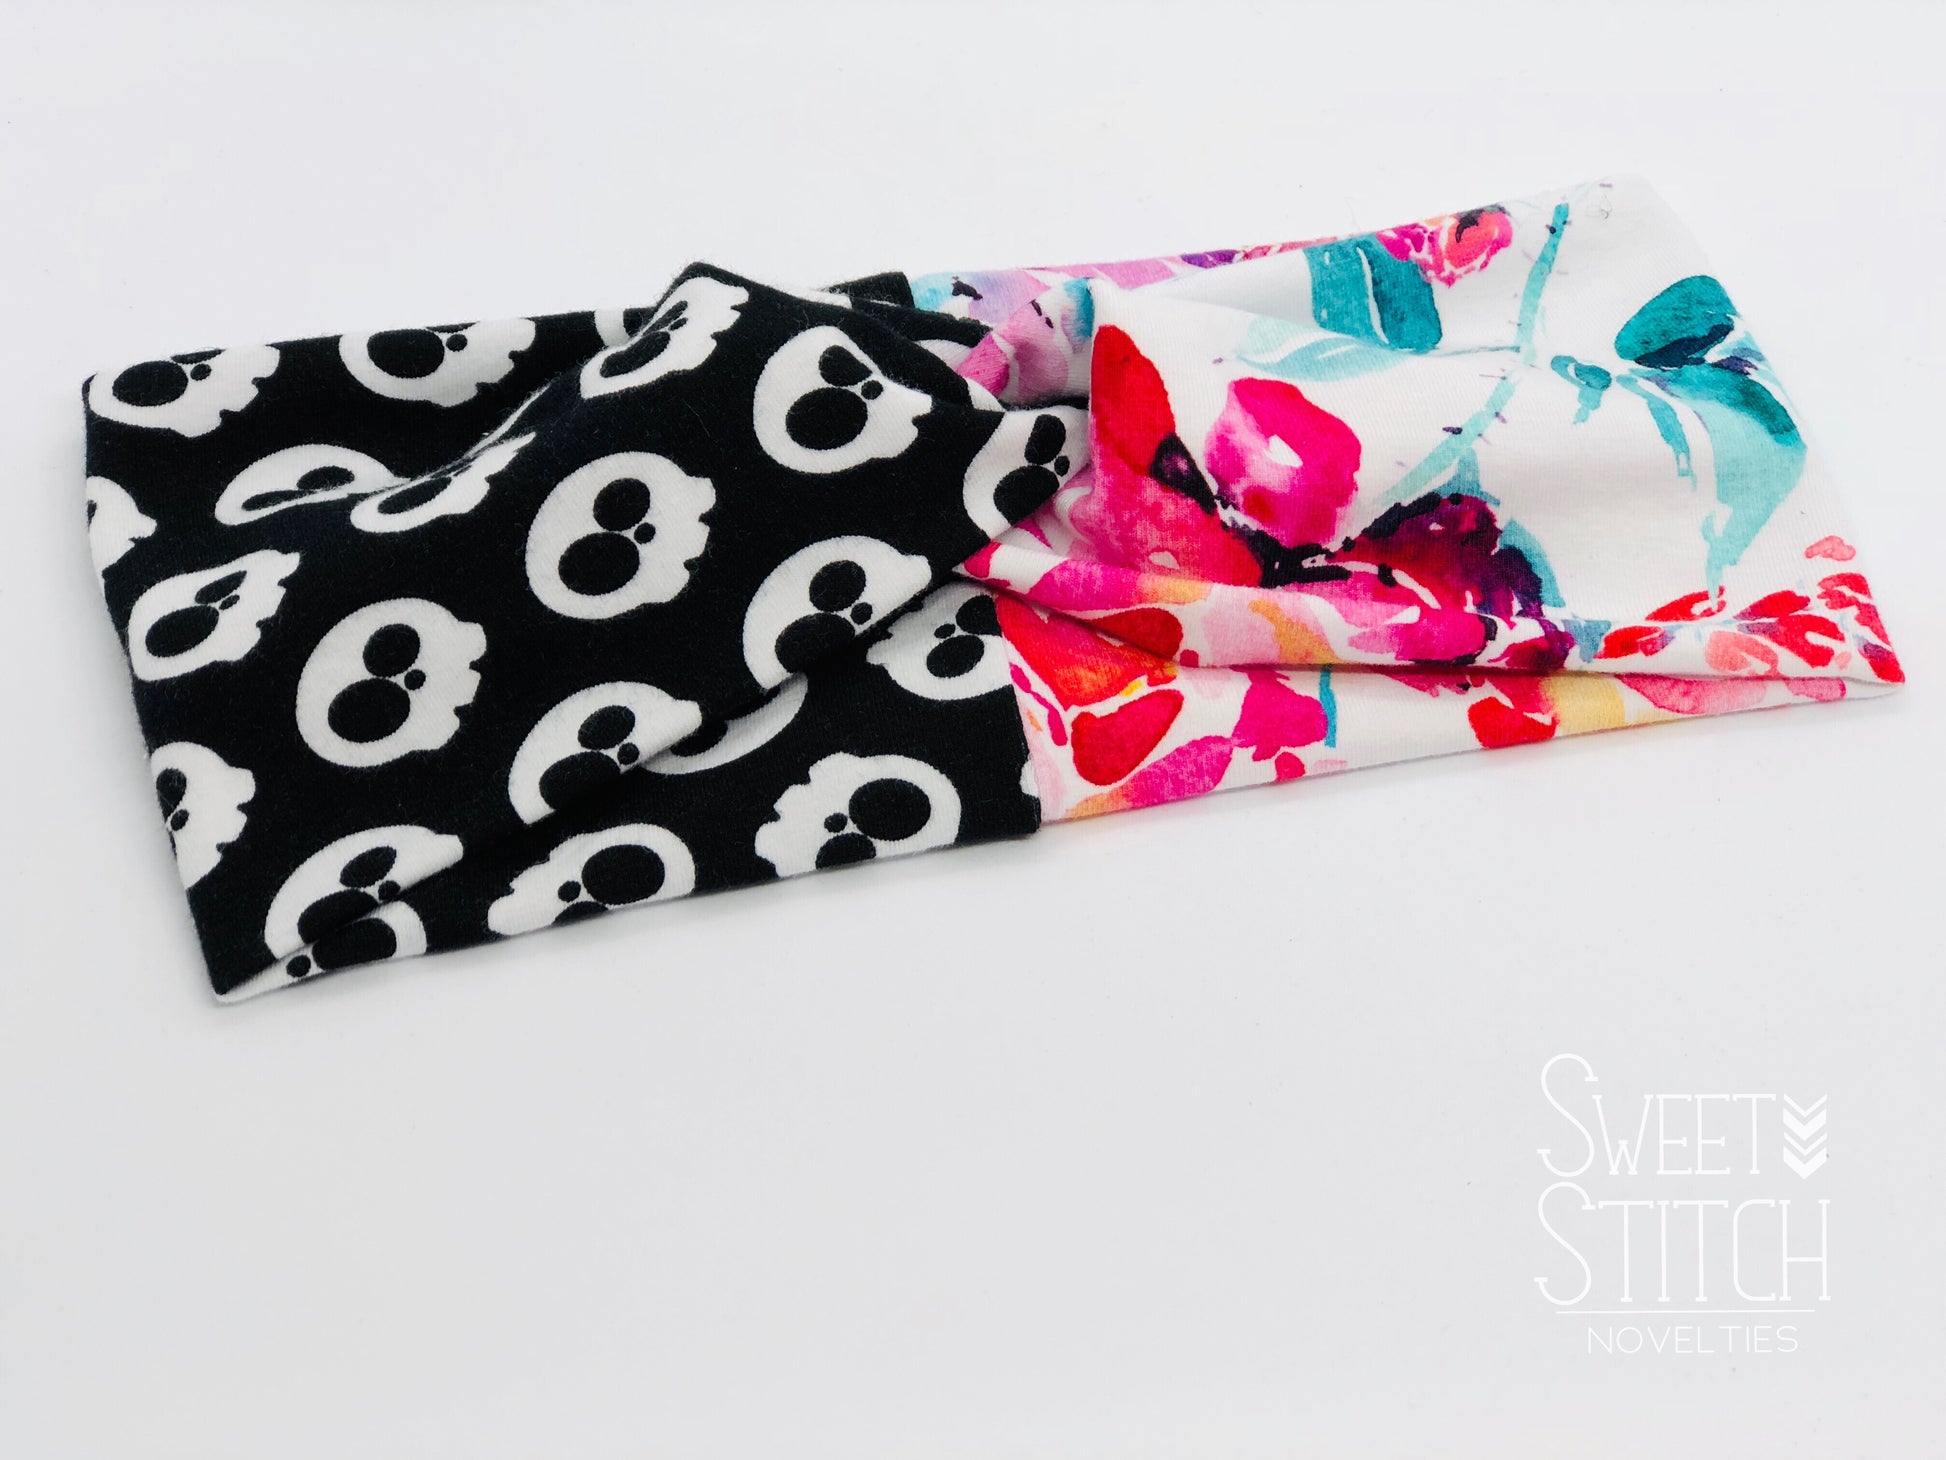 Skulls and Floral Combo TURBAN TWIST Headbands - Sweet Stitch Novelties